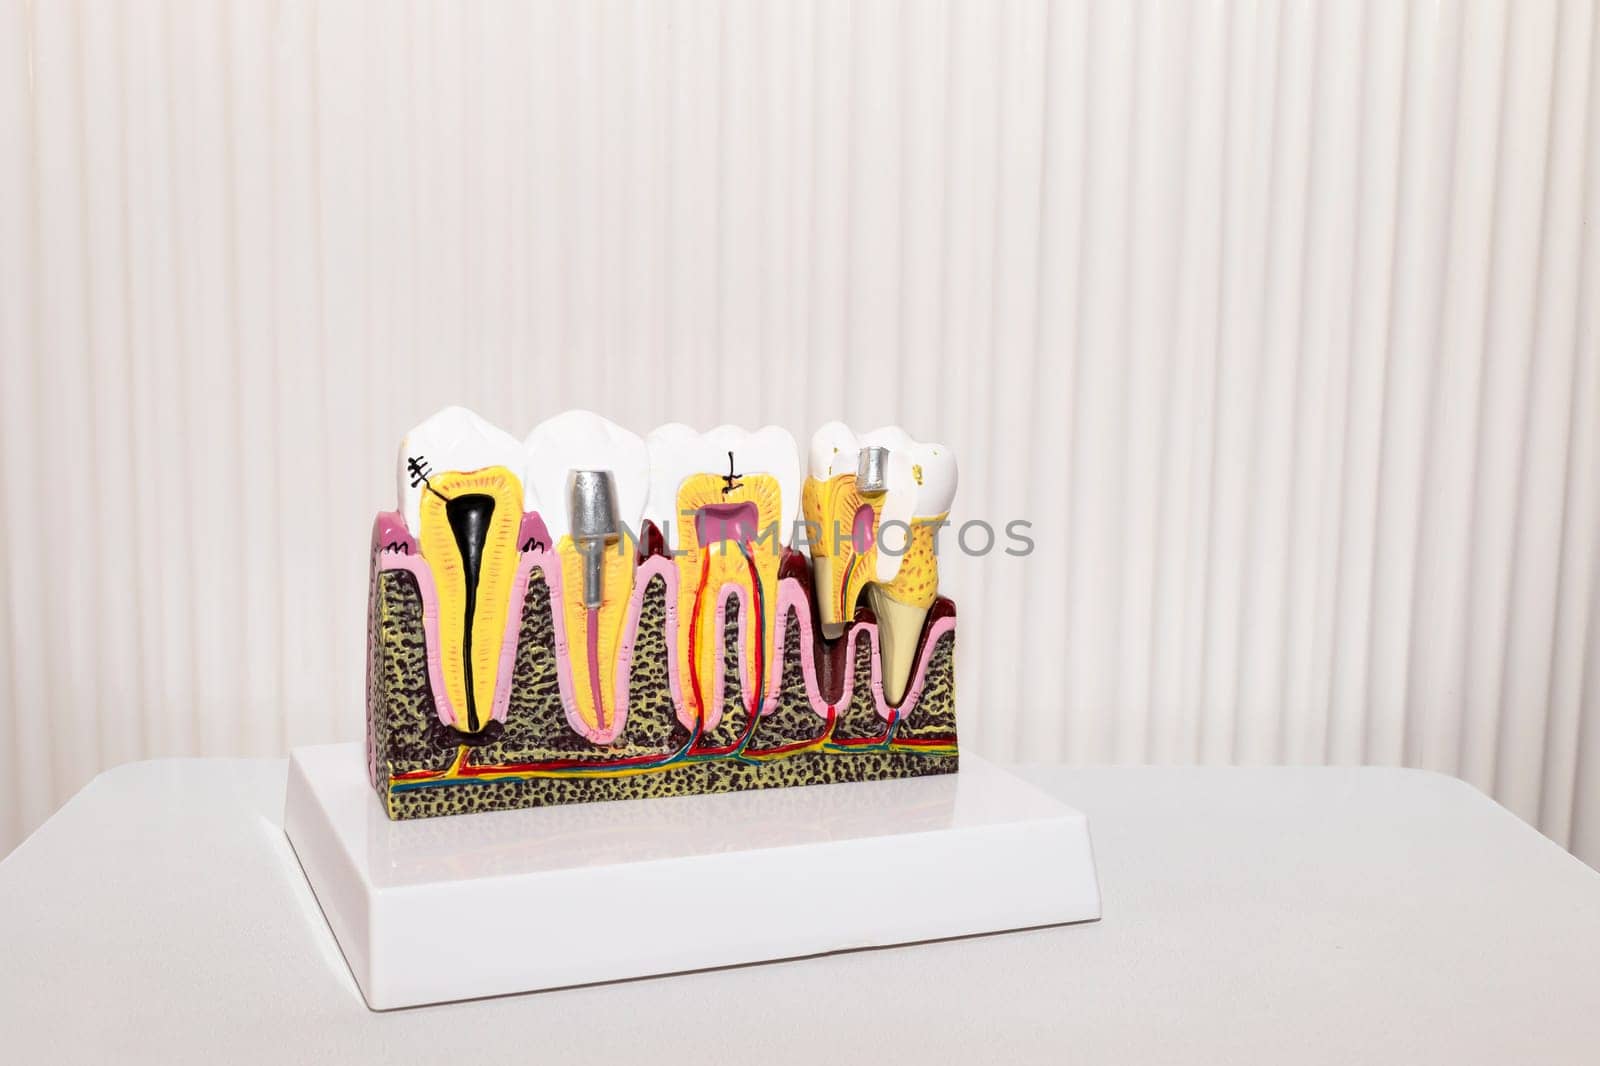 Mockup Dental Tooth Implant, Bridge Or Crown Model On Table, White Background, Copy Space. Dummy Template Human Jaw Oral Dentures. Prosthesis On Metal Peg. Horizontal Plane by netatsi